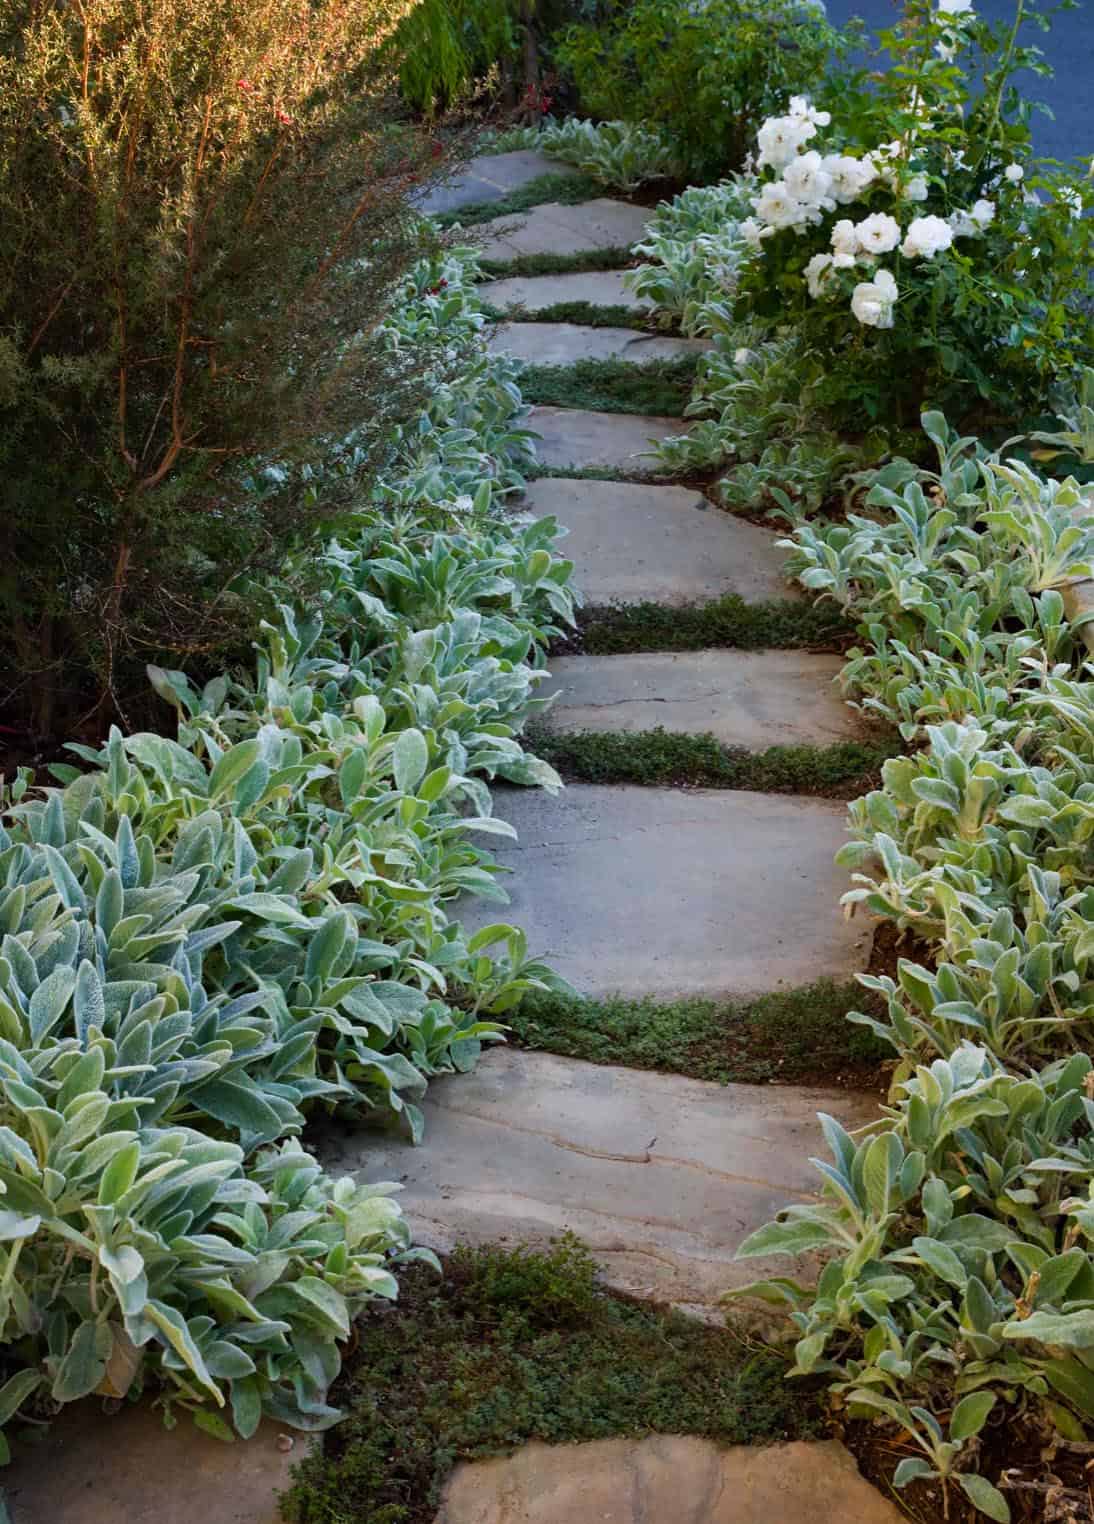 inspiring-garden-paths-walkways